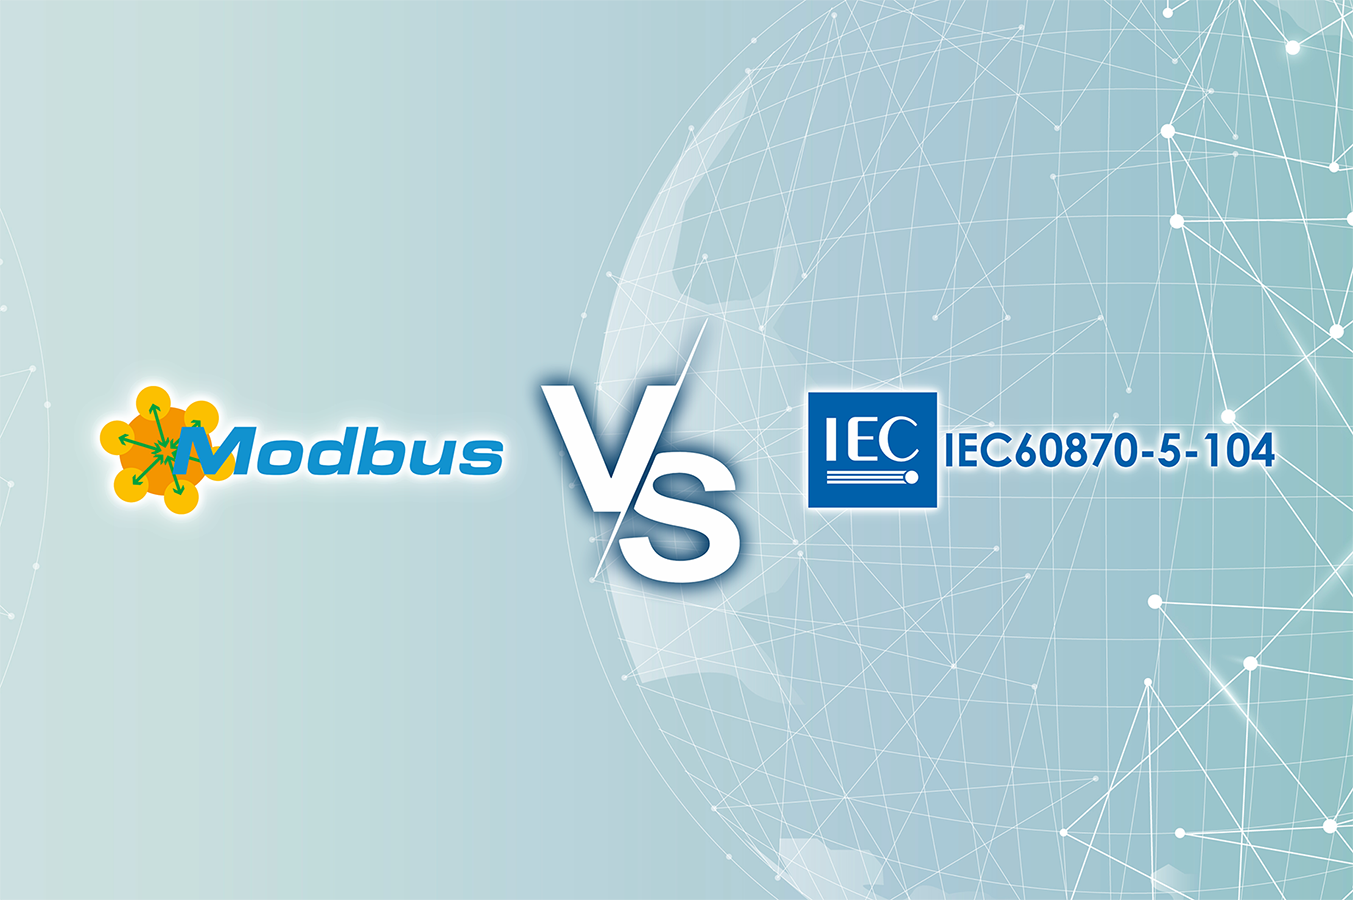 Comparison of MODBUS and IEC 60870-5-104 Communication Protocols